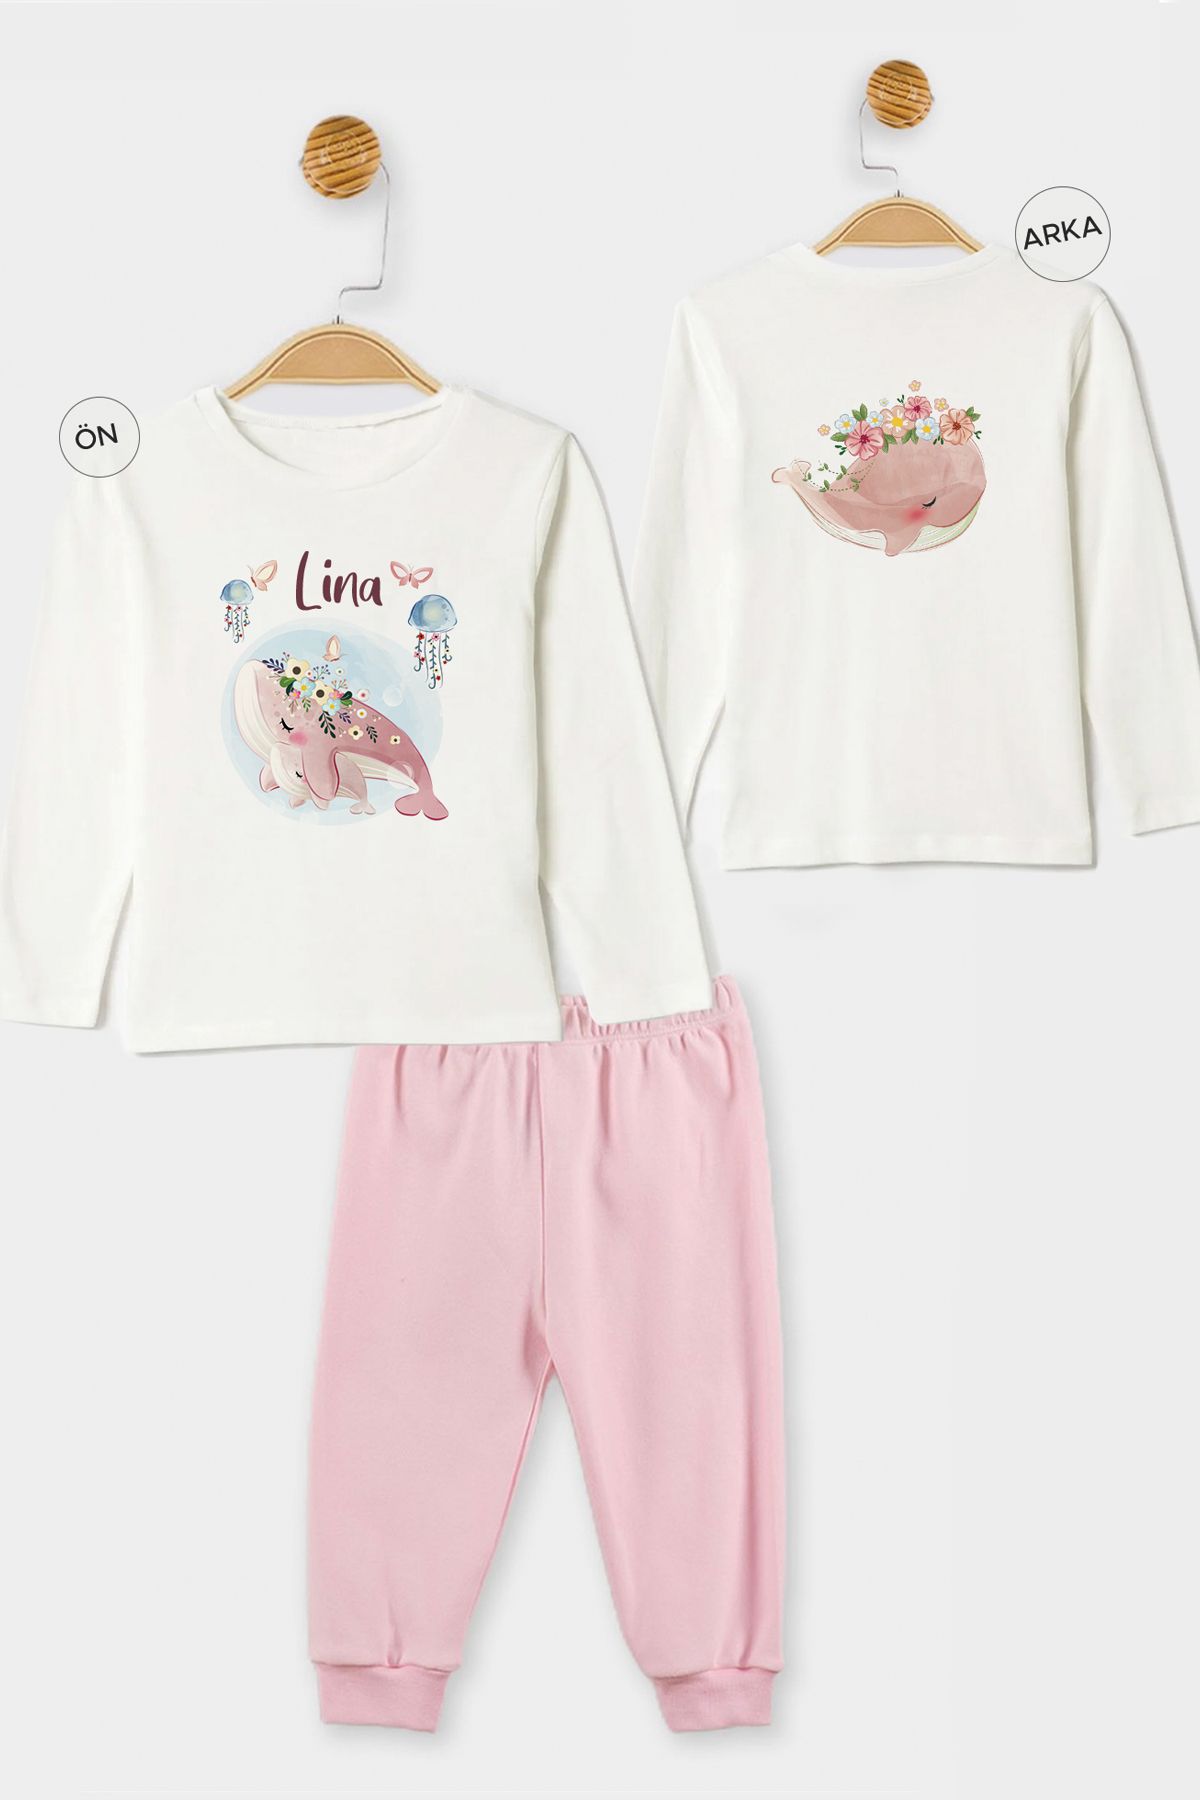 Homamia Isme Özel Organik Kız Bebek Pijama Takımı